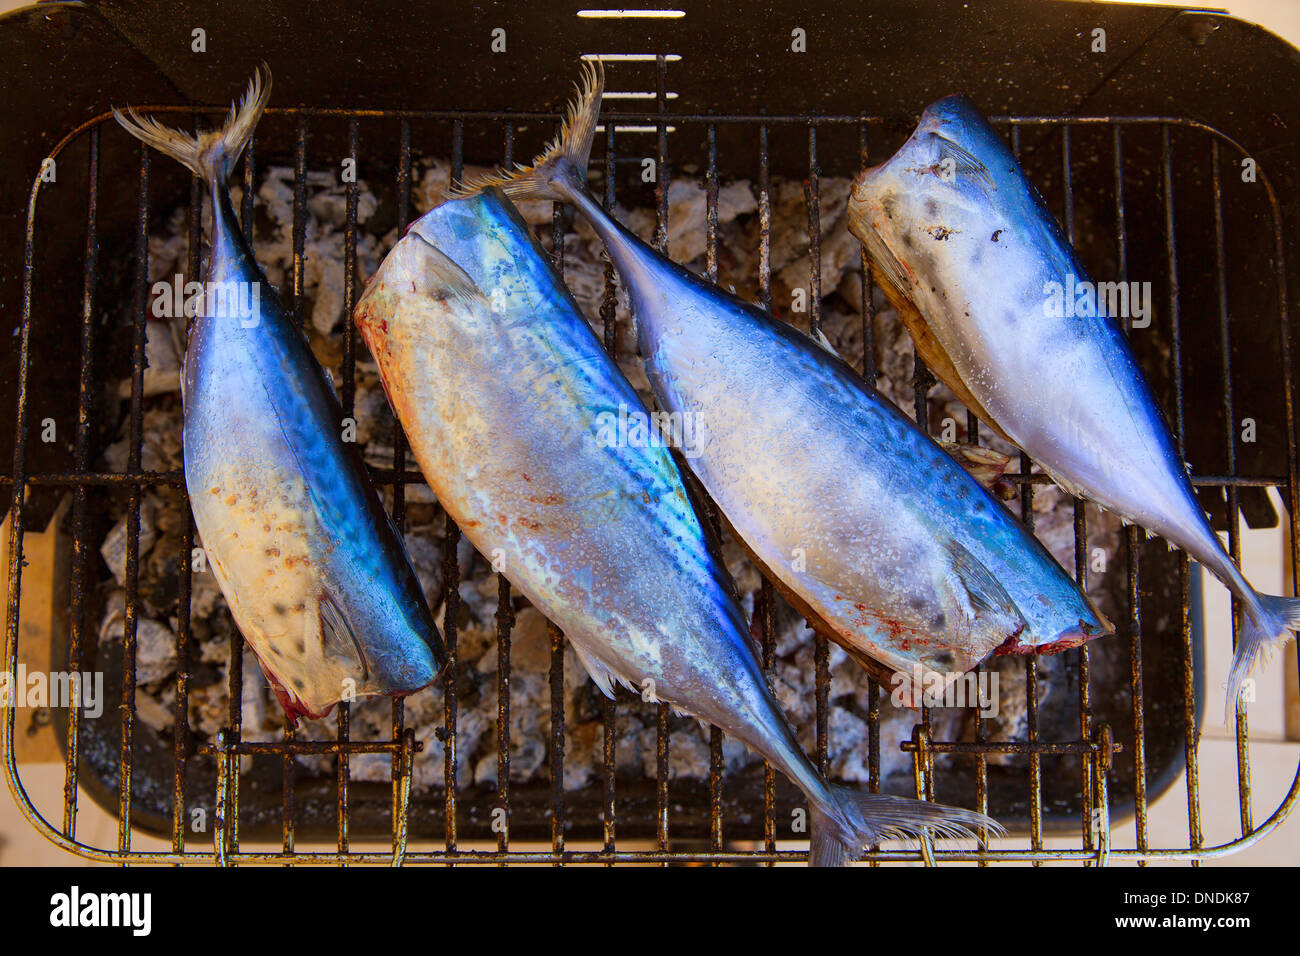 Bar-b-cue tuna fish barbecue with bonito sarda and little tunny Stock Photo